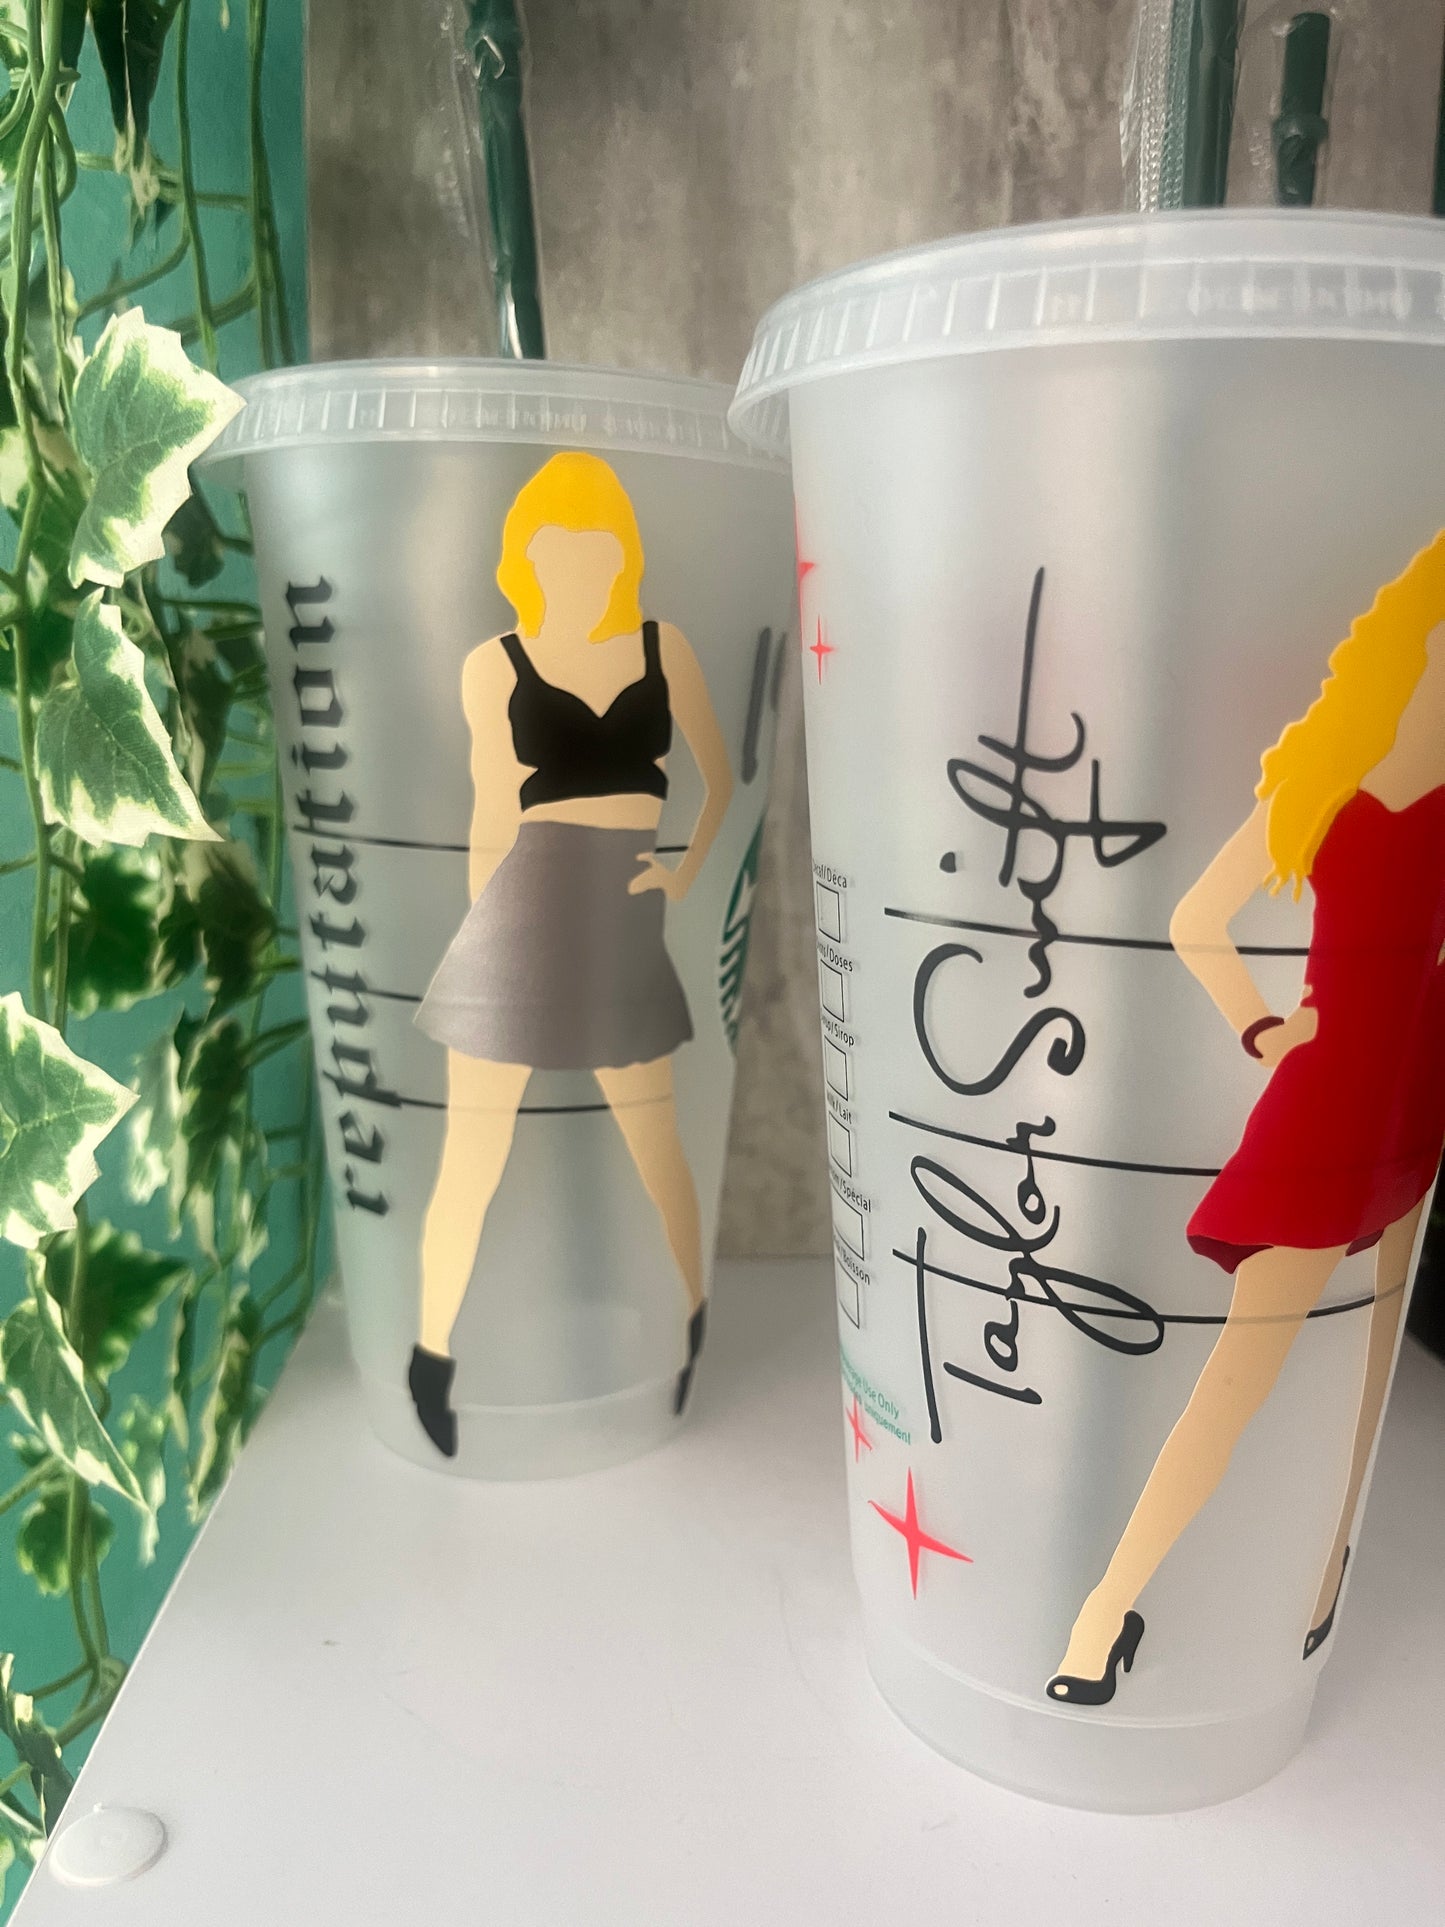 Taylor Swift “Karma” Starbucks Cold Cup